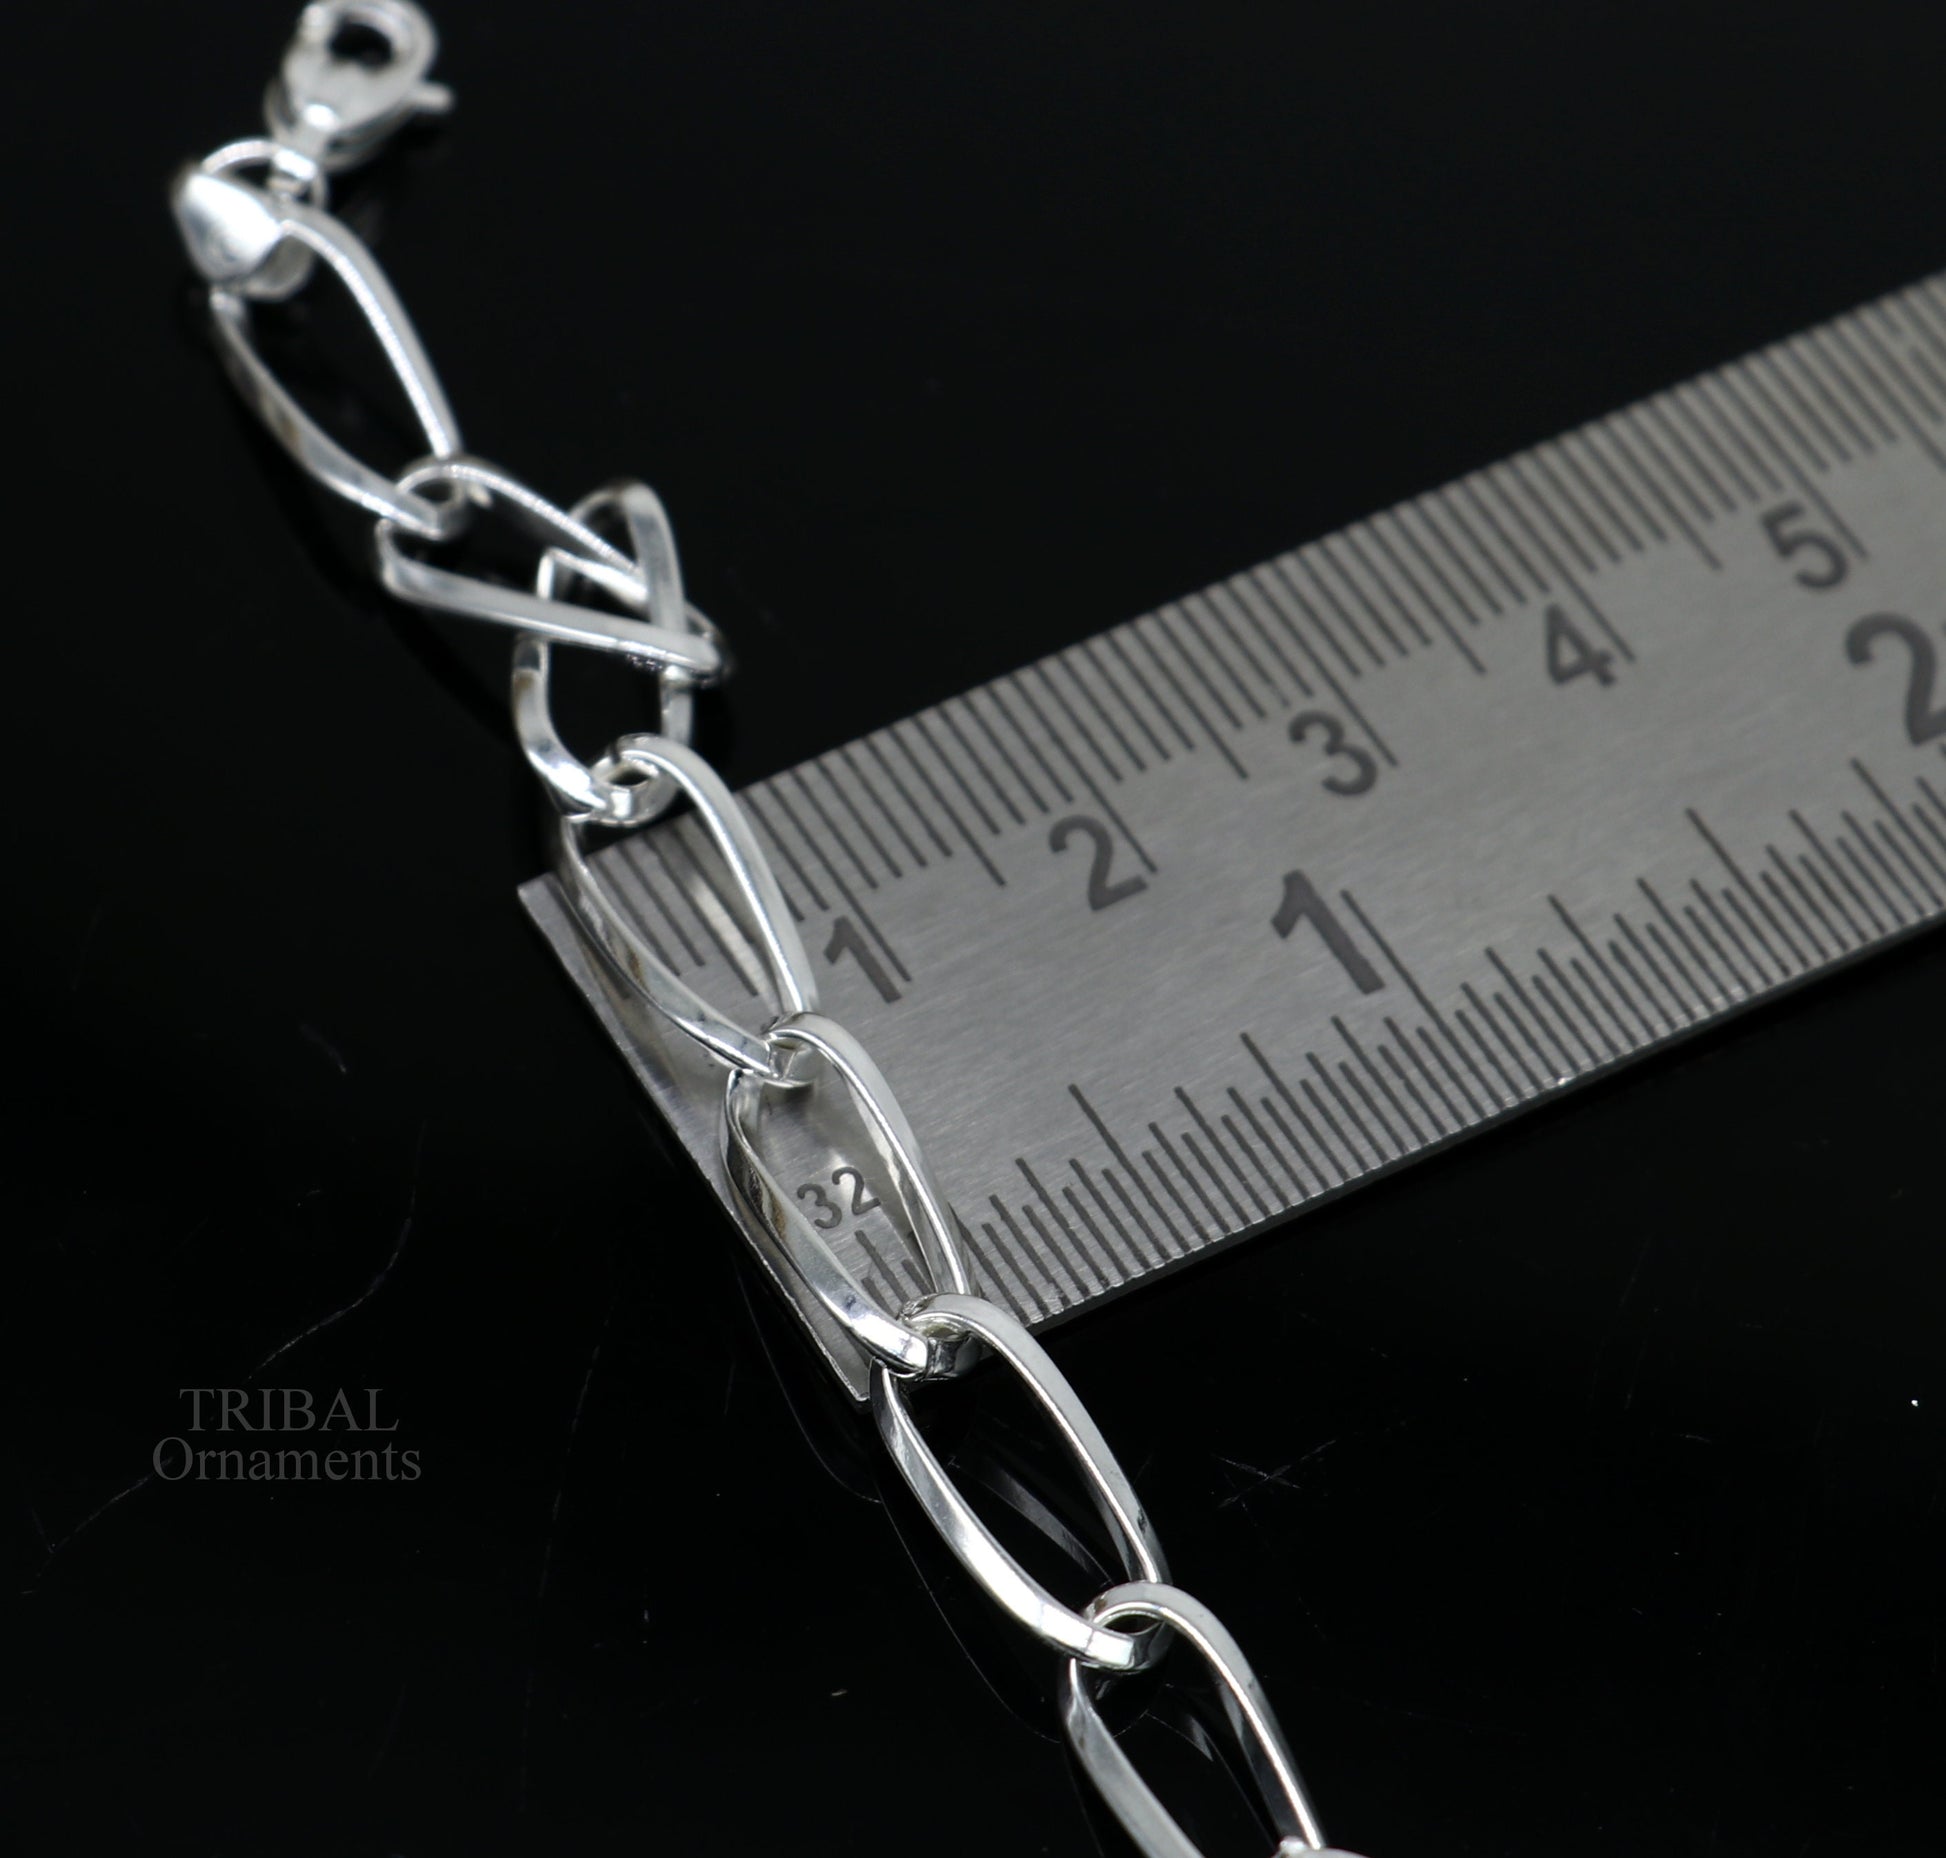 8" bracelet 925 sterling silver handmade new fancy stylish solid chain bracelet, stylish bracelet gifting elegant unisex jewelry nsbr510 - TRIBAL ORNAMENTS